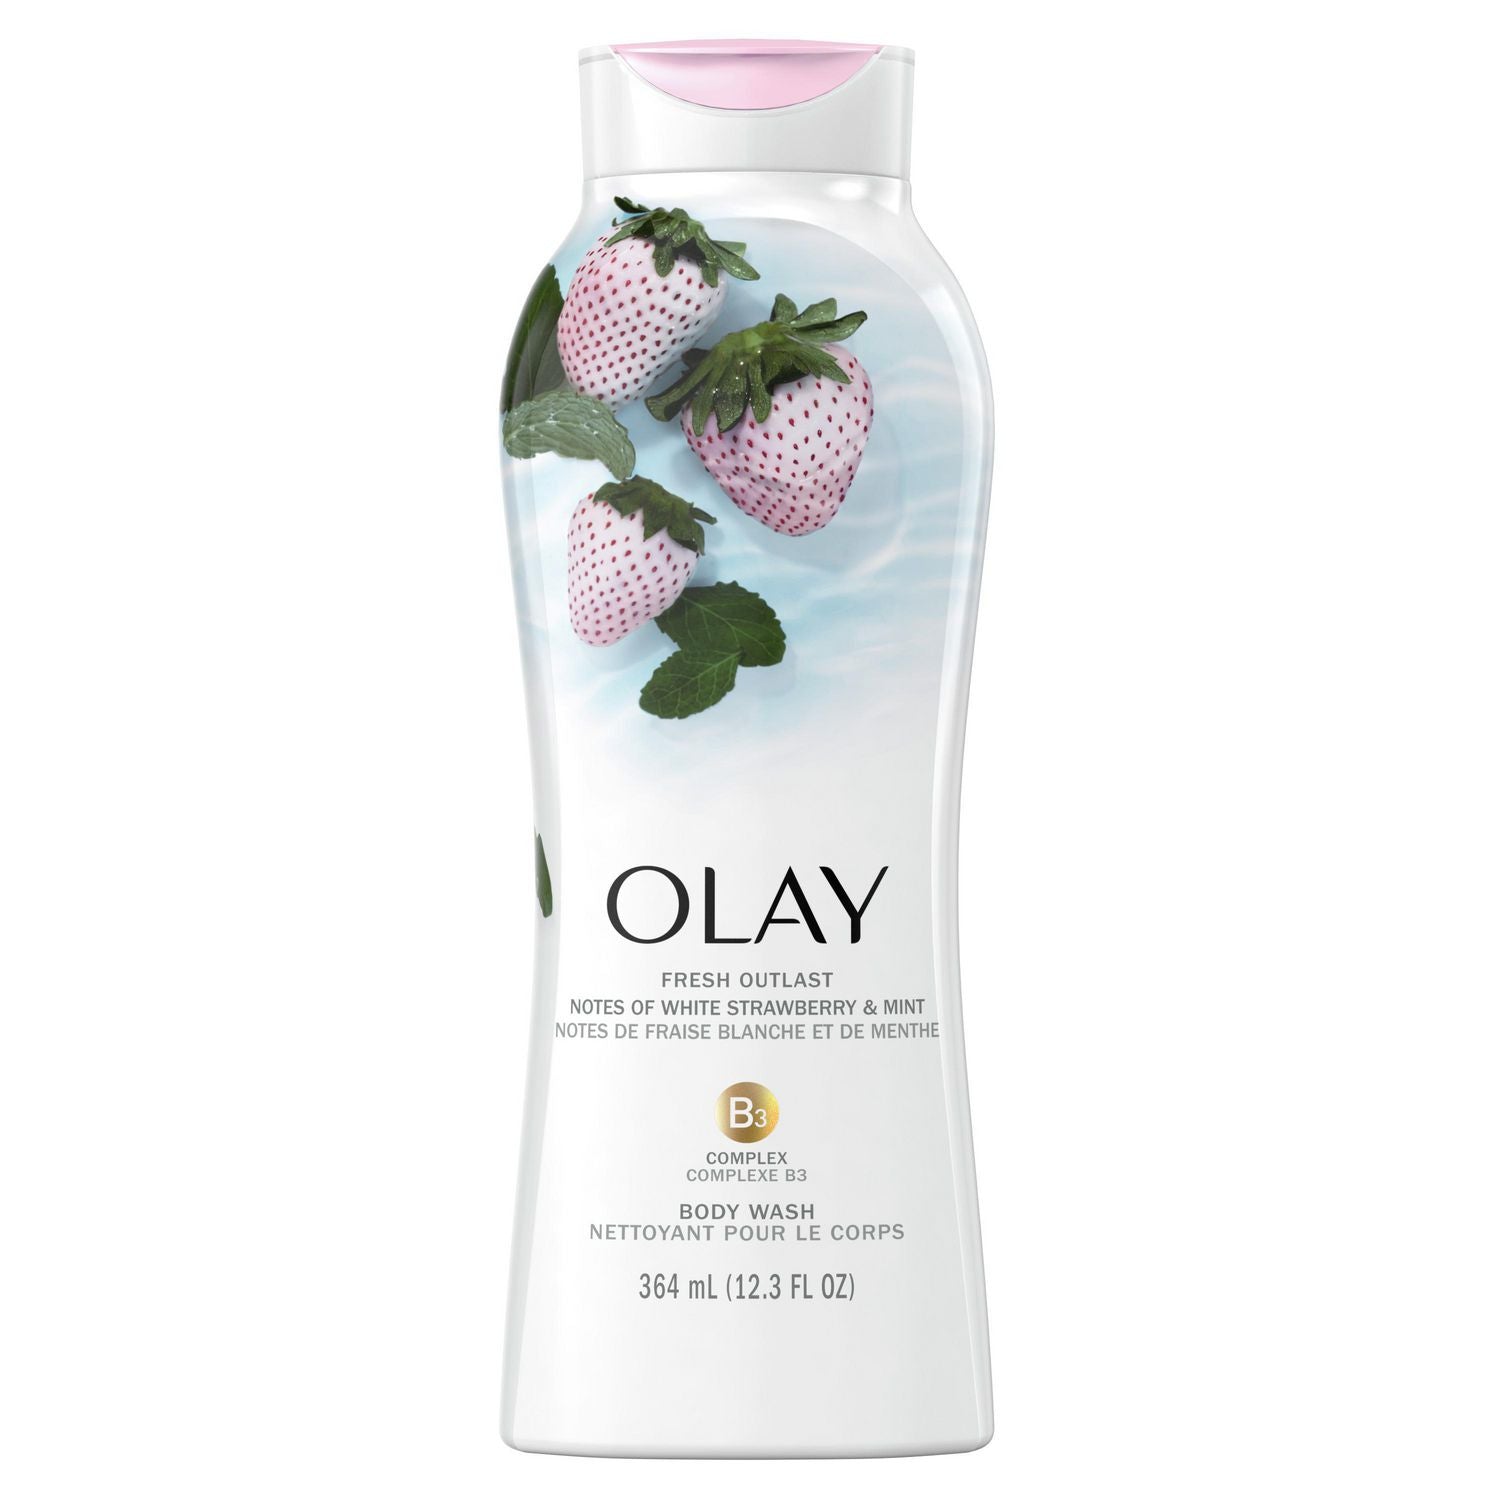 Olay Fresh Outlast White Strawberry & Mint Body Wash 364mL